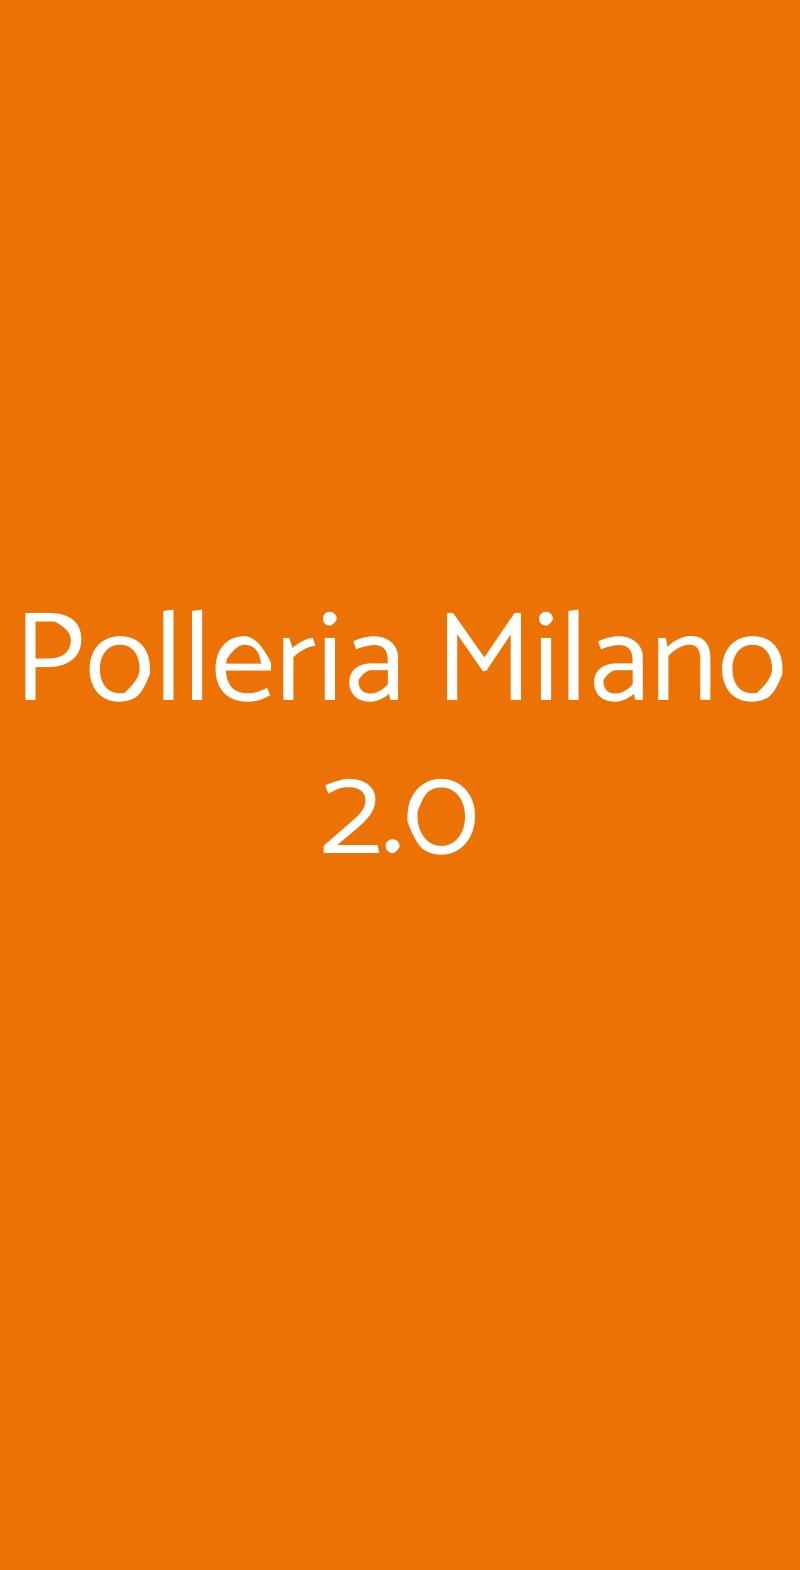 Polleria Milano 2.0 Milano menù 1 pagina